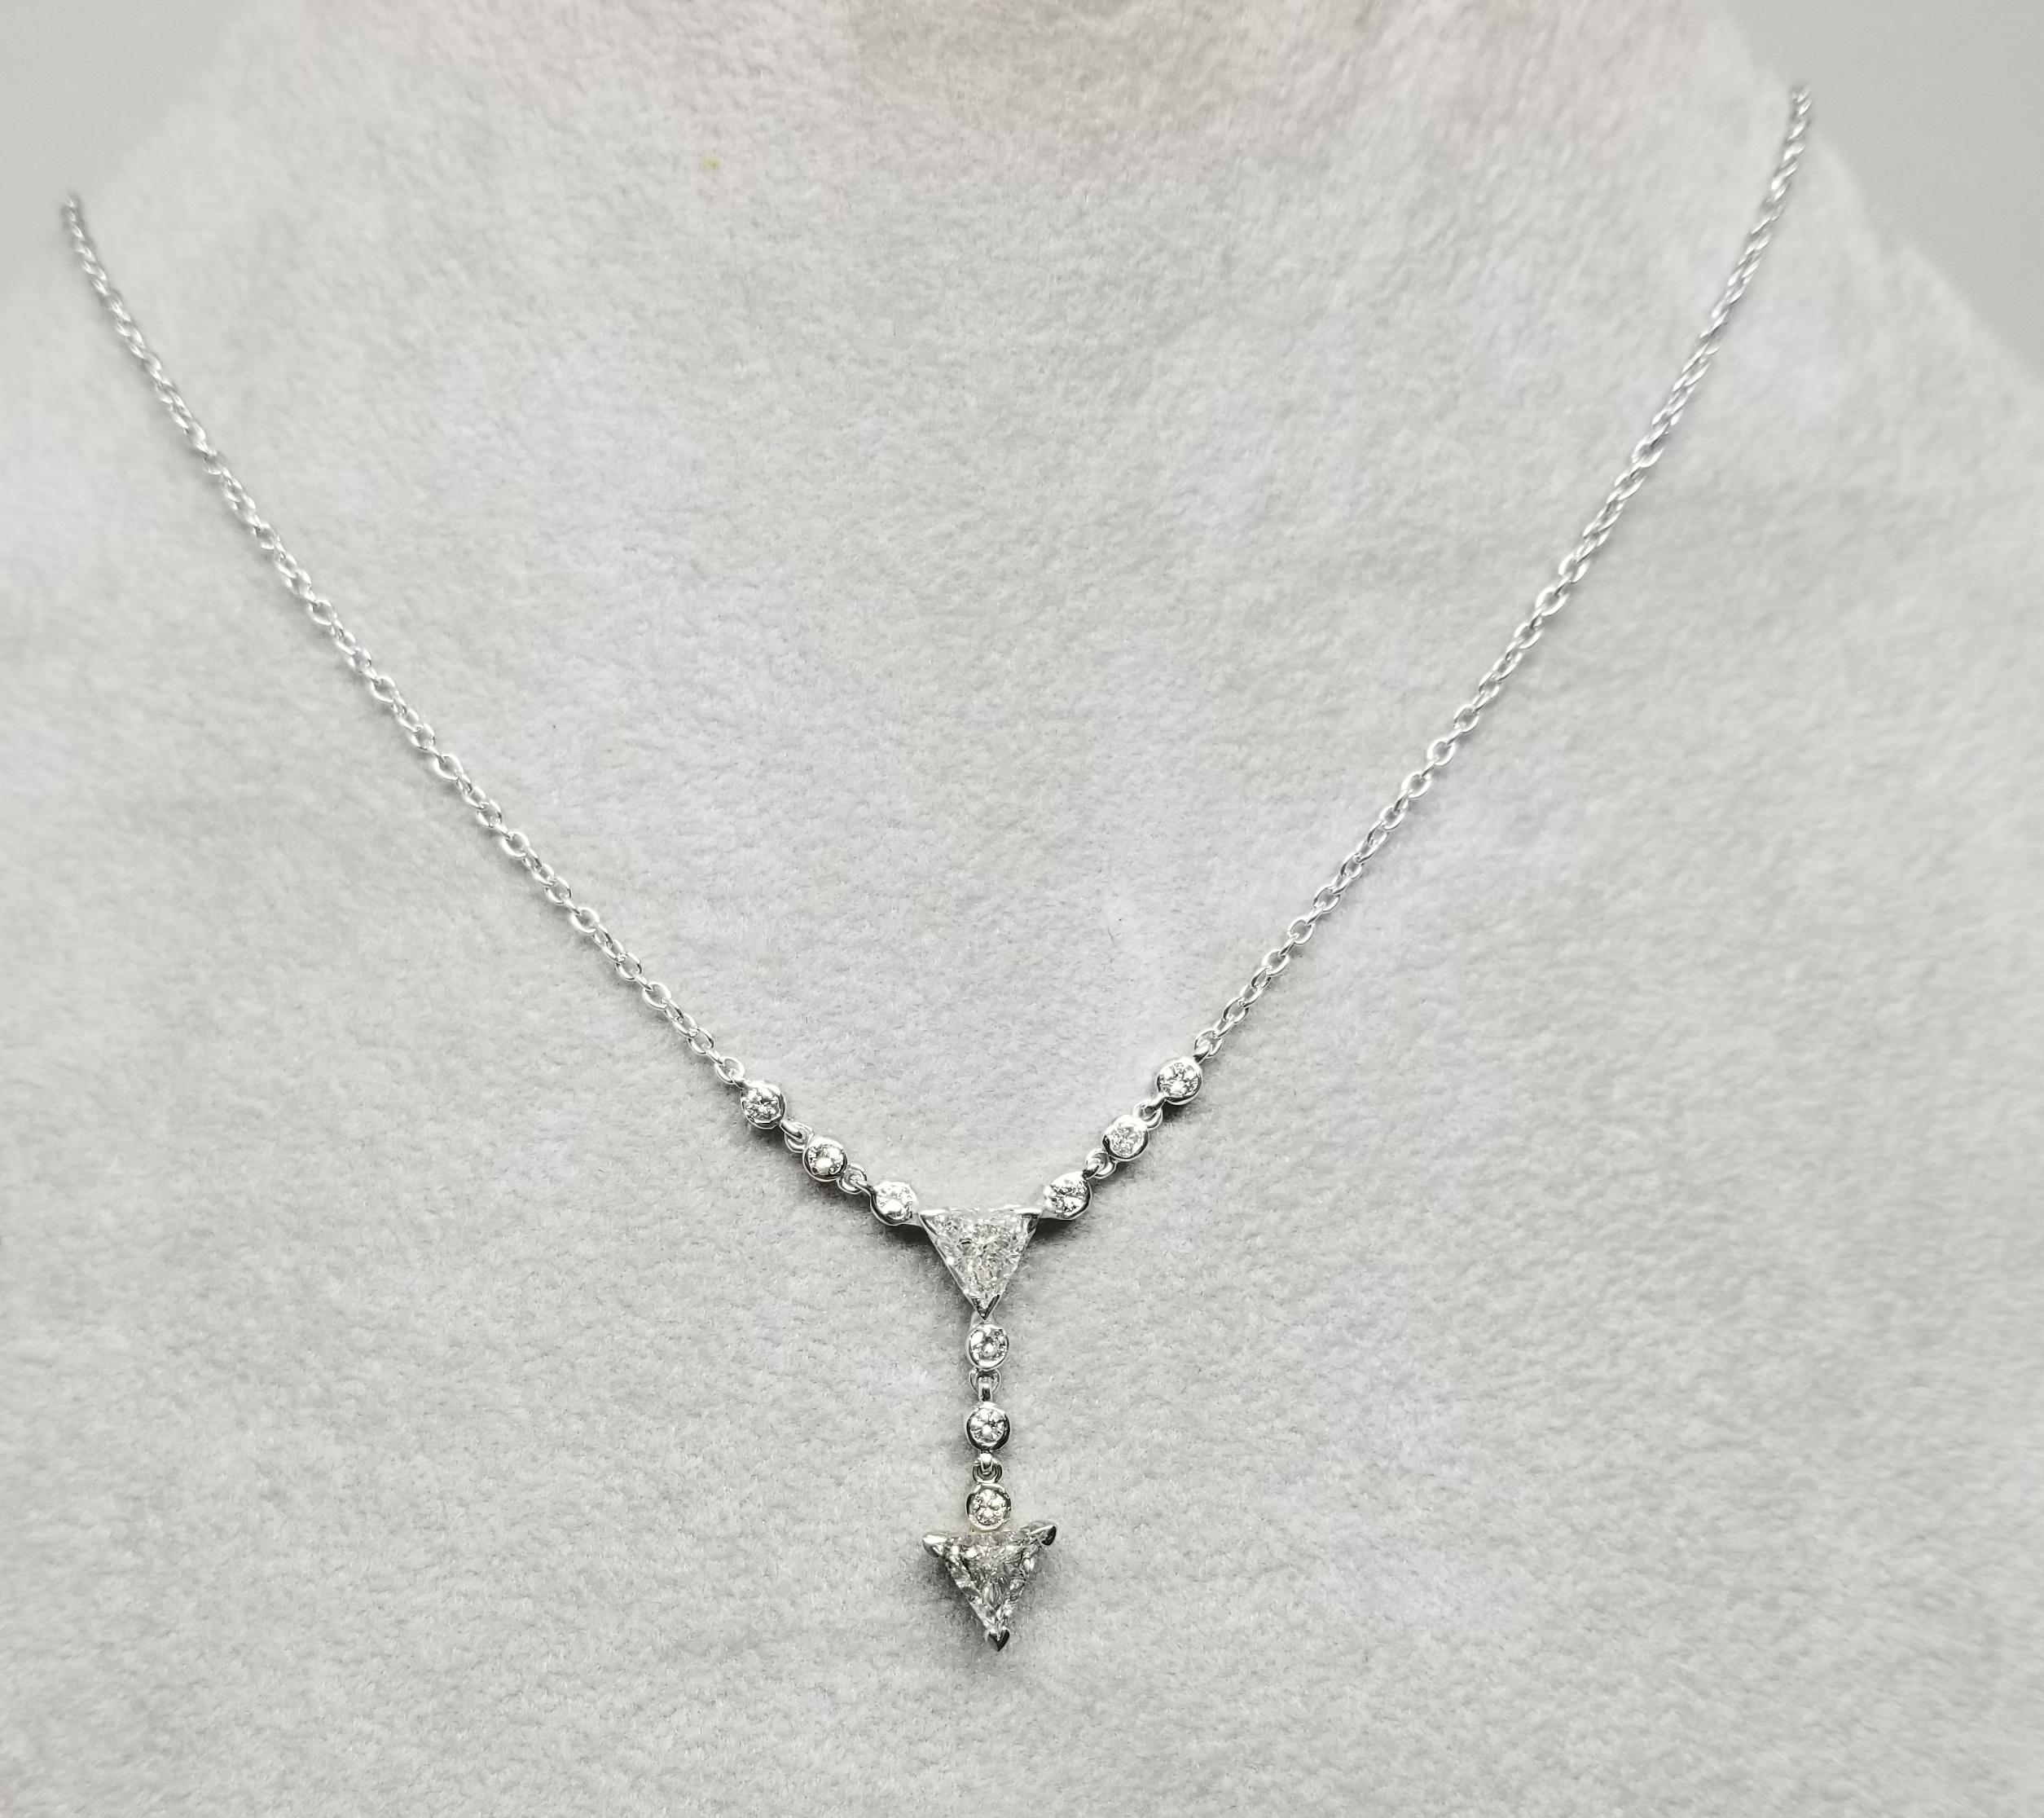 14 karat  Triangle diamond dangle pendant, containing 2 triangle cut diamonds weighing .90pts. and 9 round full cut diamonds weighing .30pts. on a 16 inch small link chain.